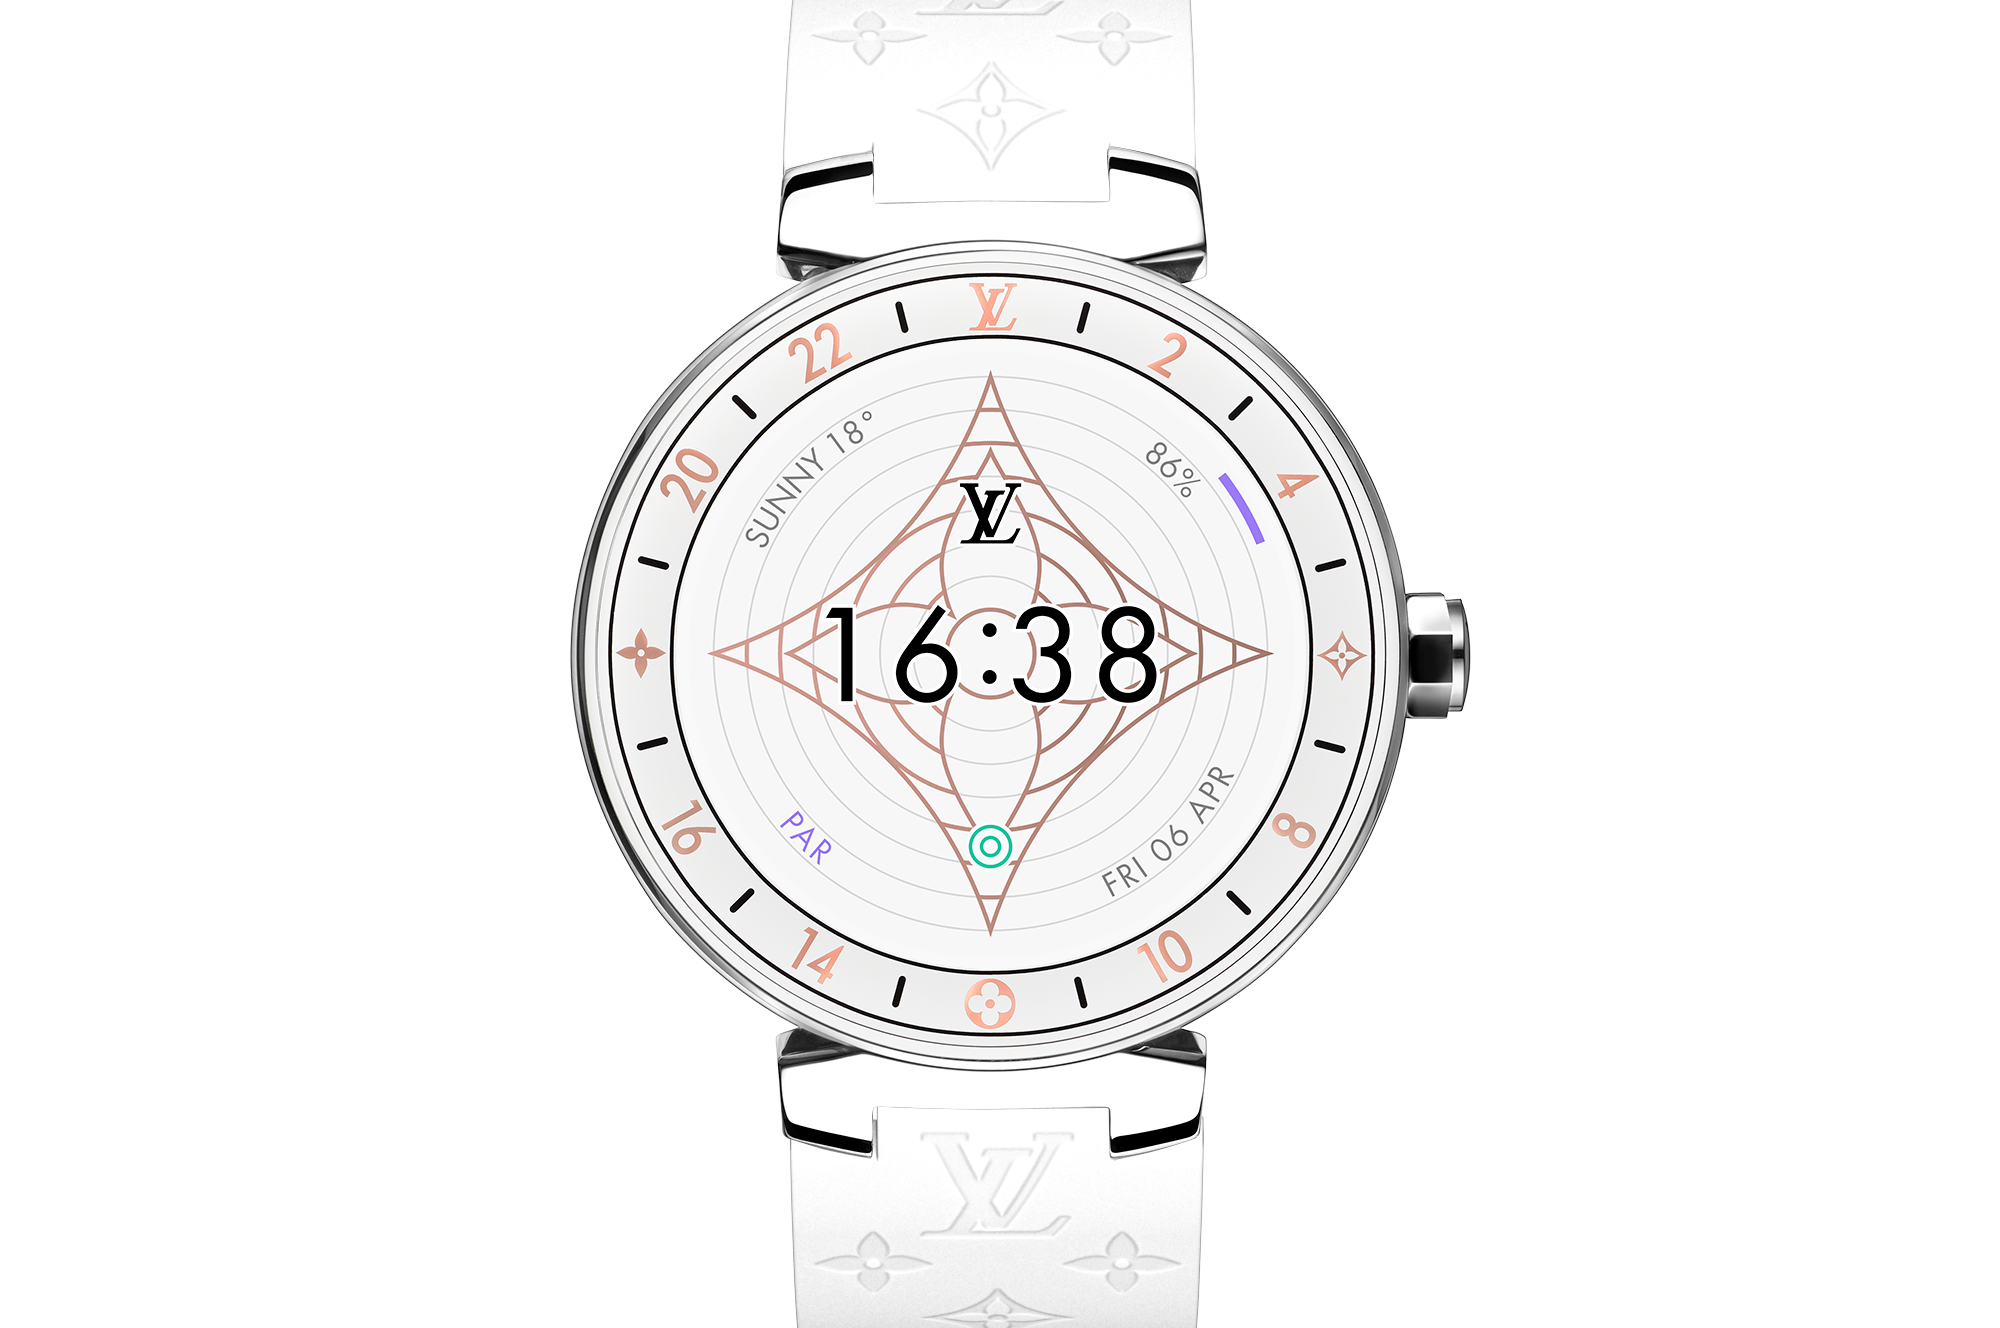 Michael Burke 把 Tambour Horizon 定位成「瑞士製造的精品腕錶，碰巧擁有高科技的內在」，可以自由更換錶帶與更新錶盤樣式，內建品牌專屬 My Travel 與 City Guide 功能，使精品腕錶更貼近 21 世紀時髦國際旅行客的需求。